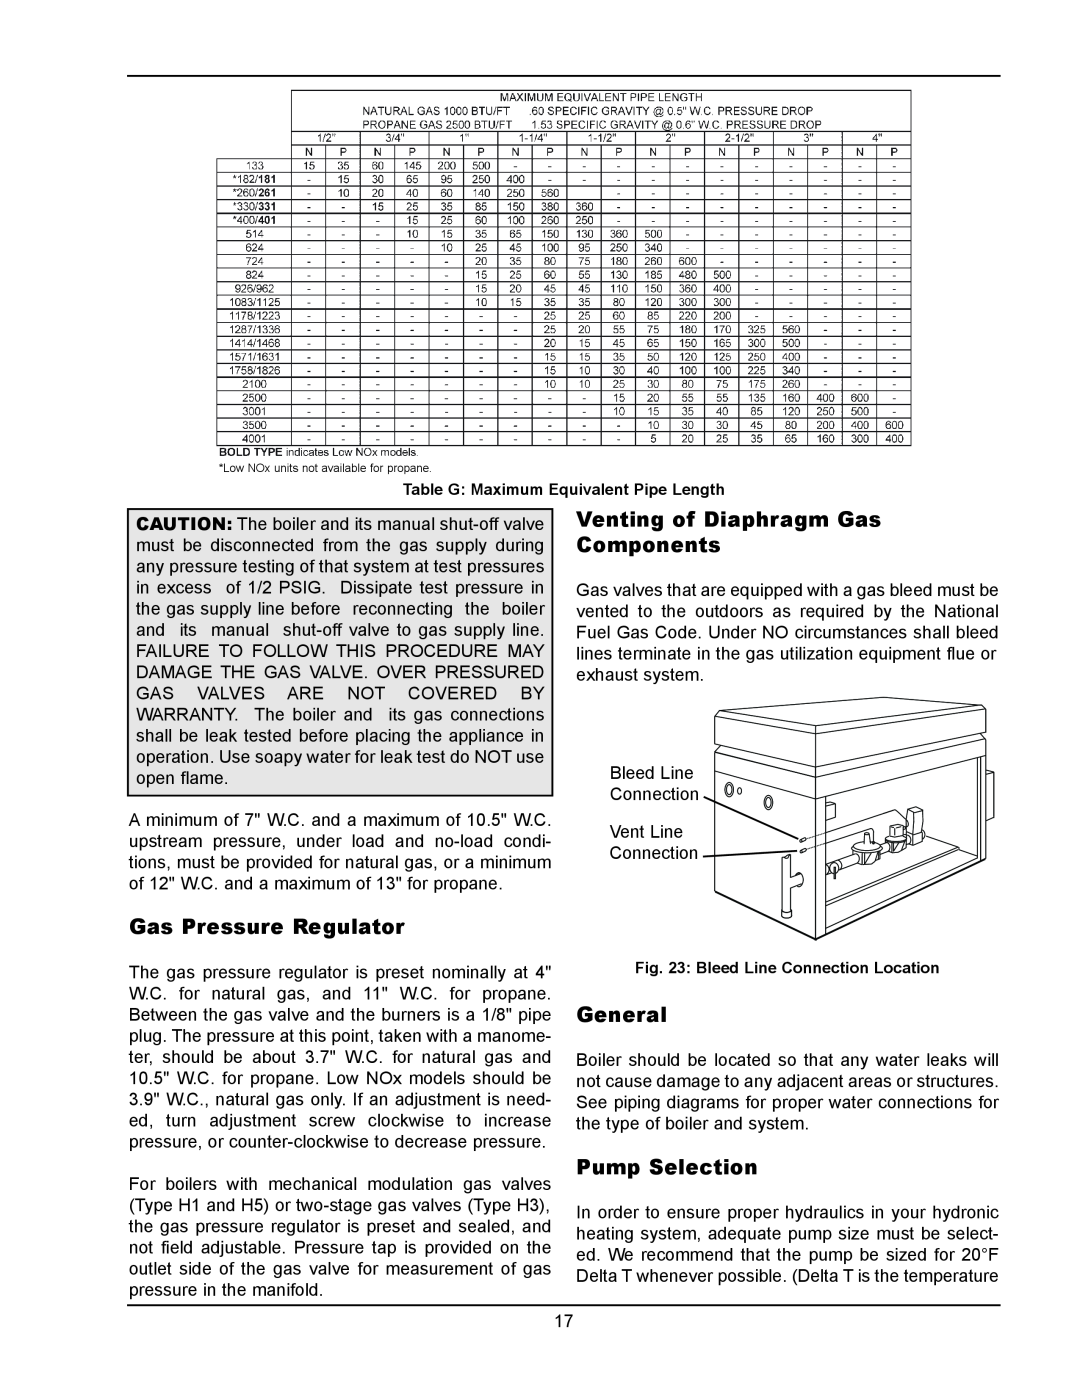 Raypak 133-4001 manual Venting of Diaphragm Gas Components, Gas Pressure Regulator, General, Pump Selection 